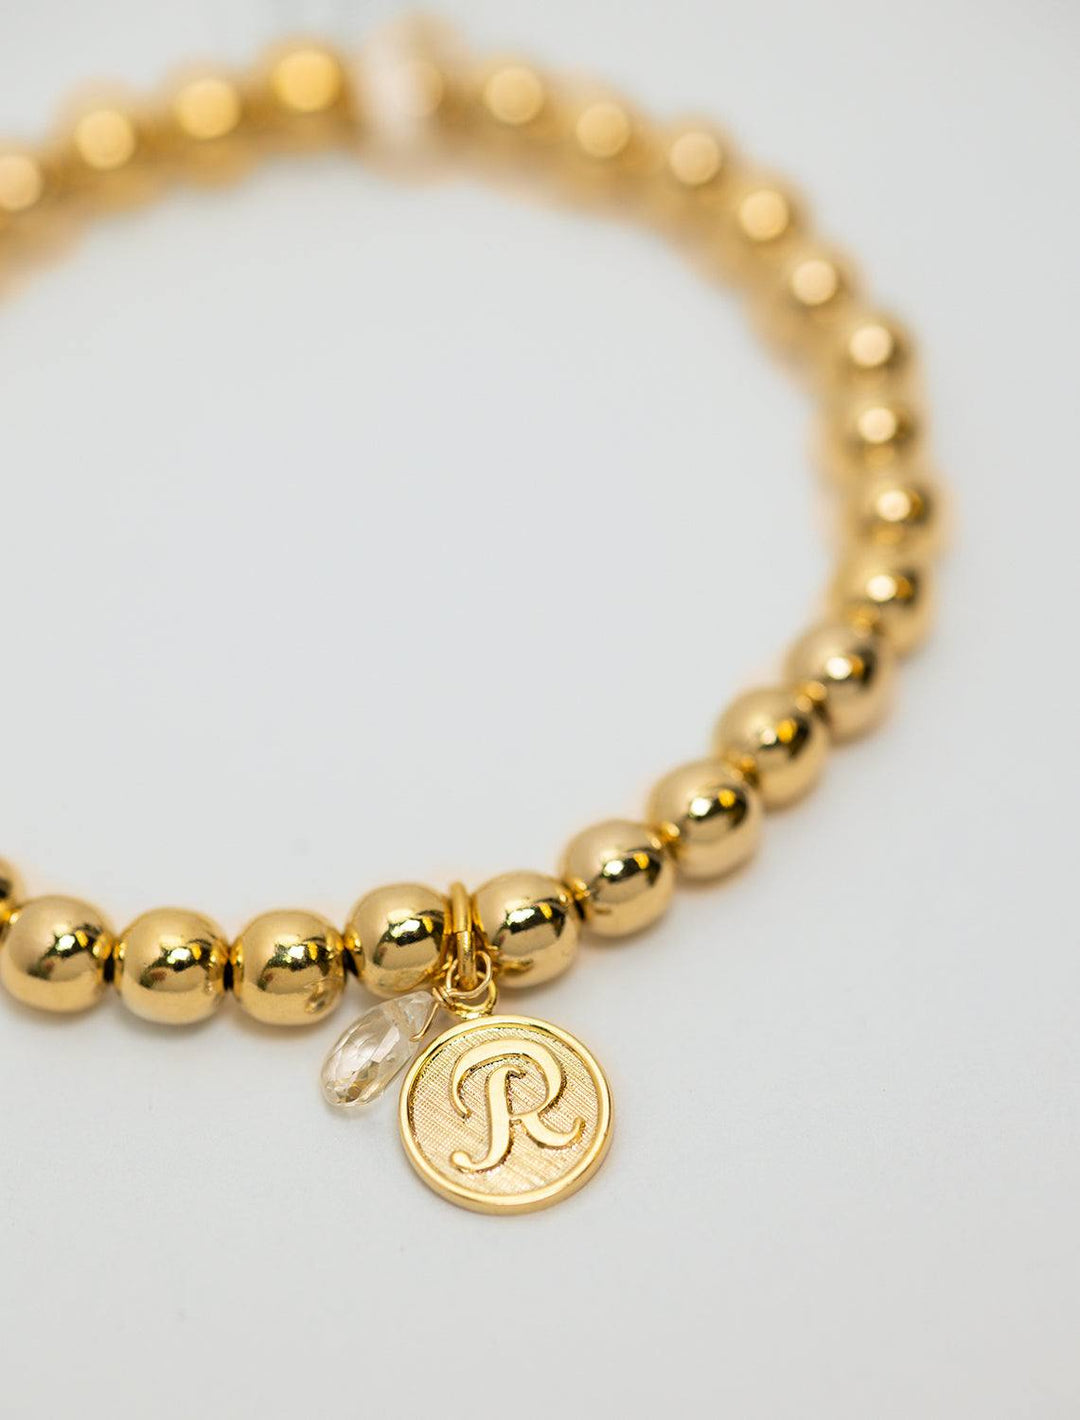 close up view of beaded monogram bracelet | R charm and gem